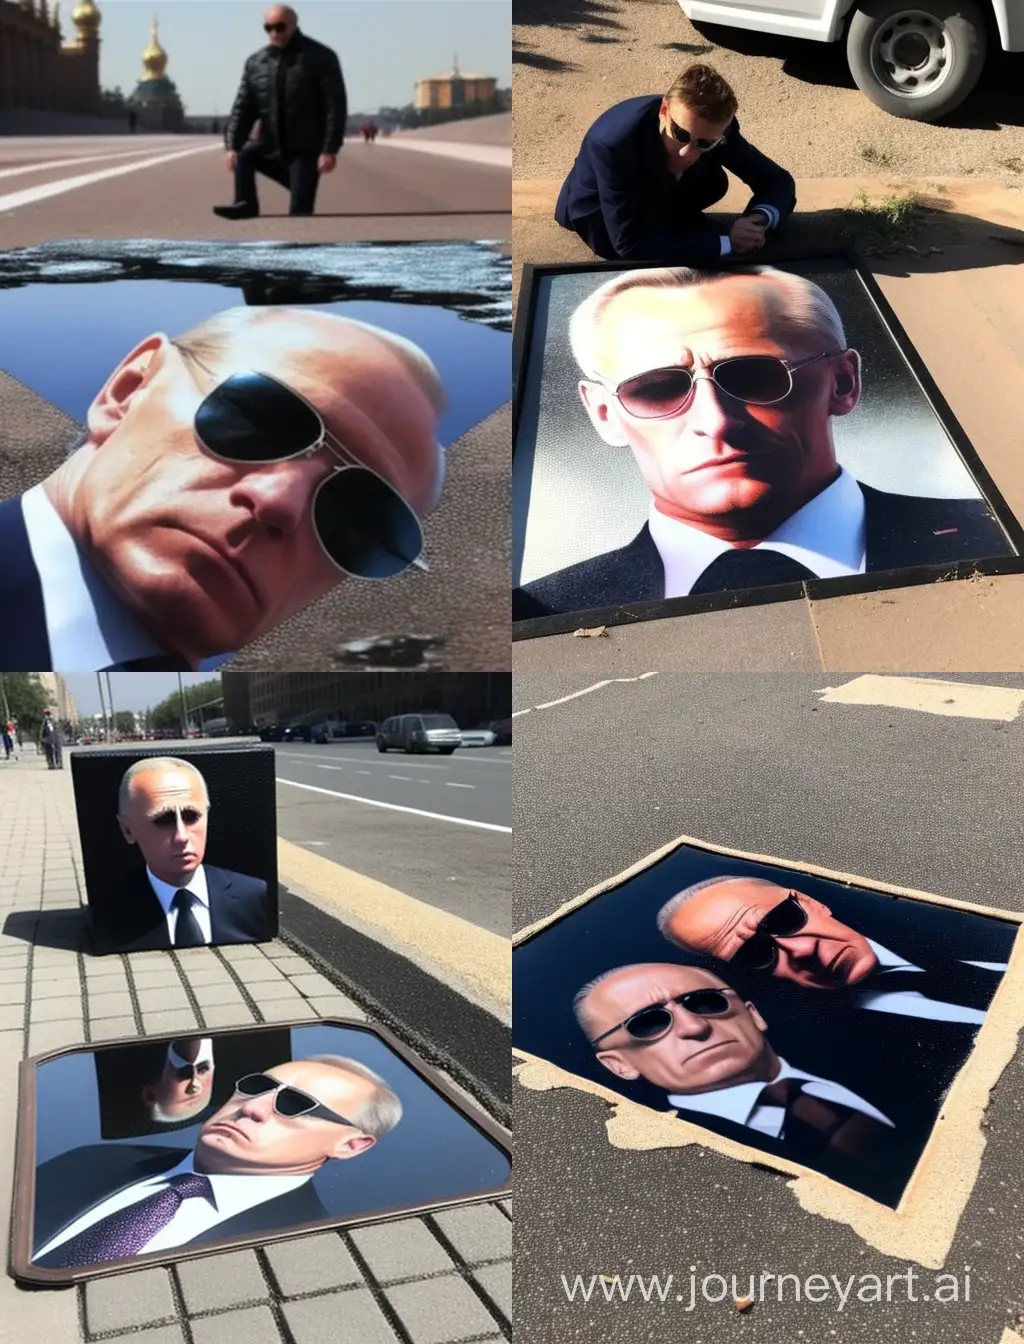 Political-Showdown-Putin-Observing-Biden-on-Asphalt